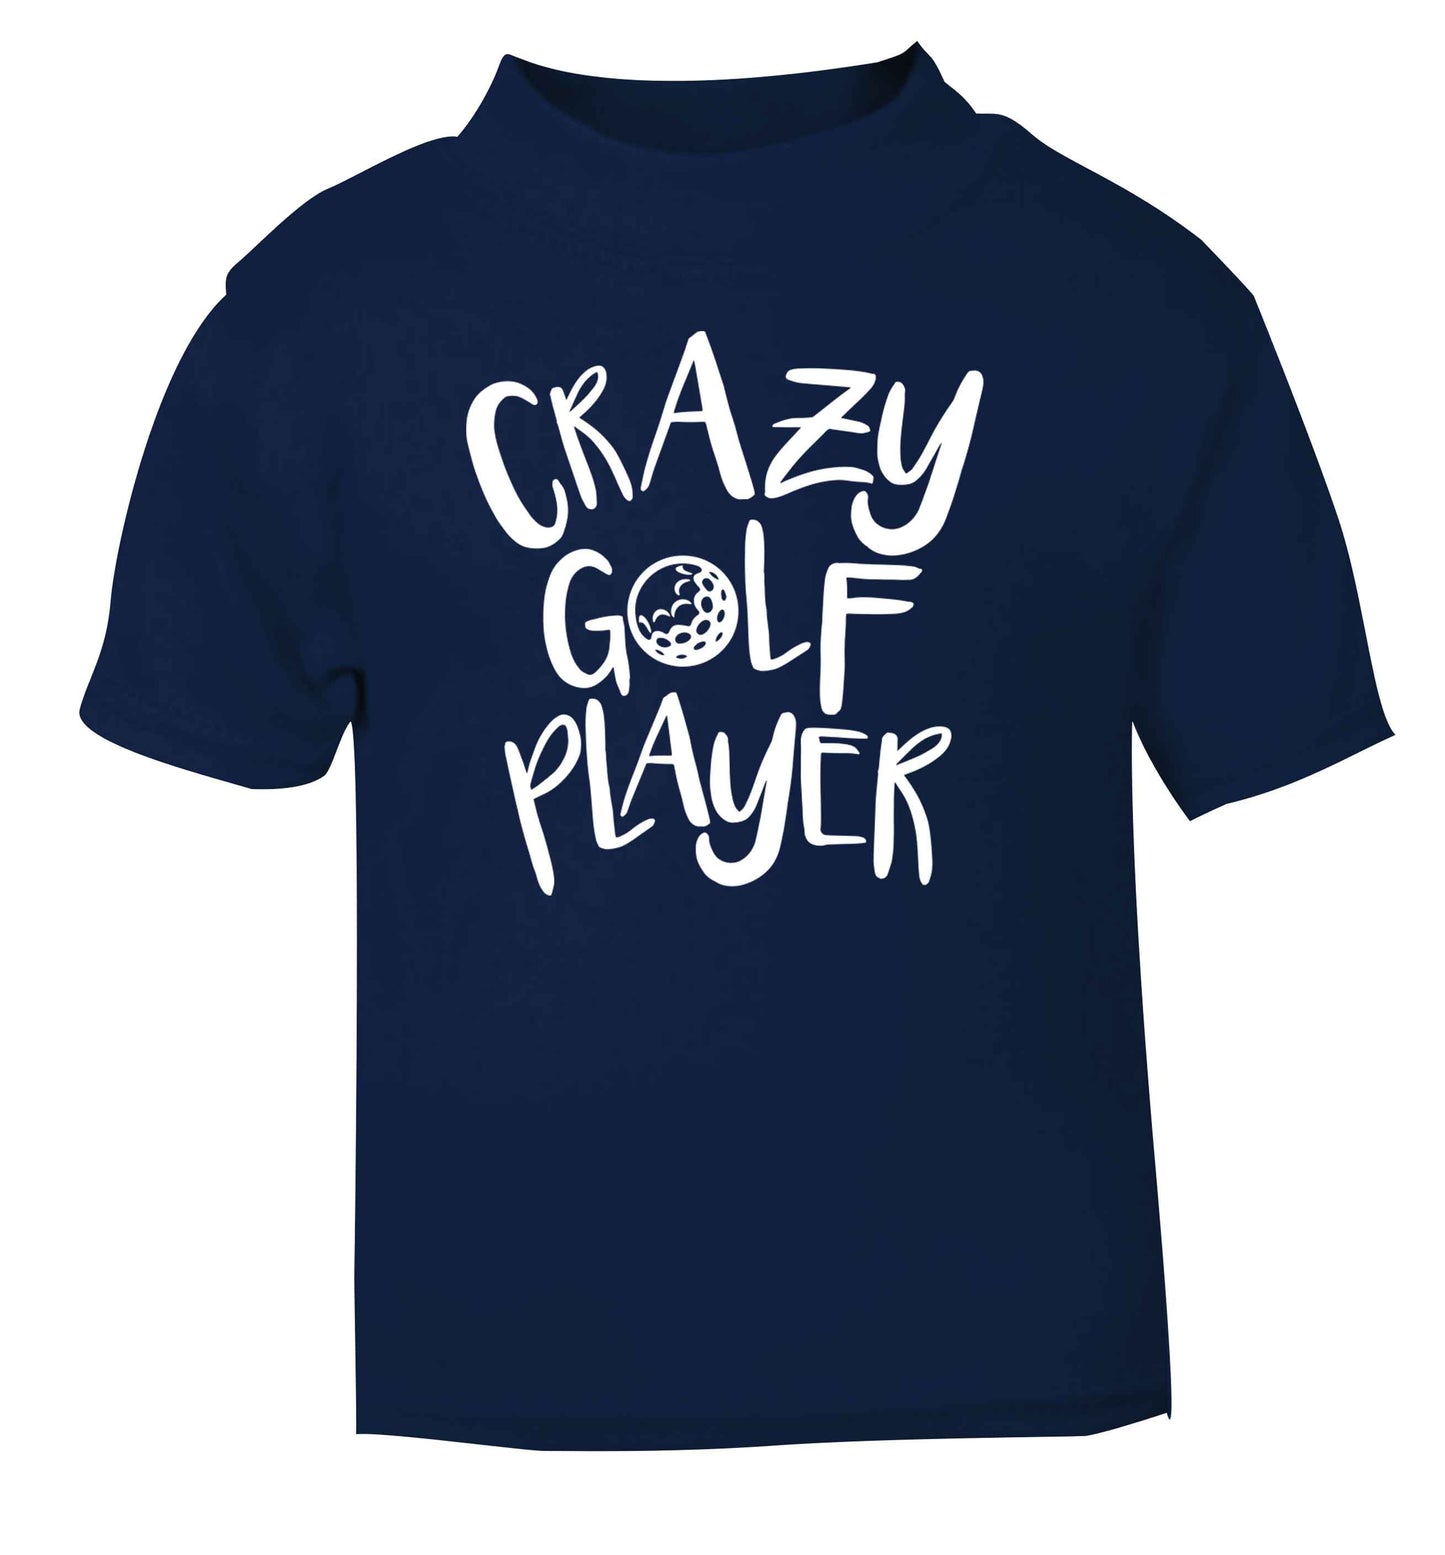 Crazy golf player navy Baby Toddler Tshirt 2 Years